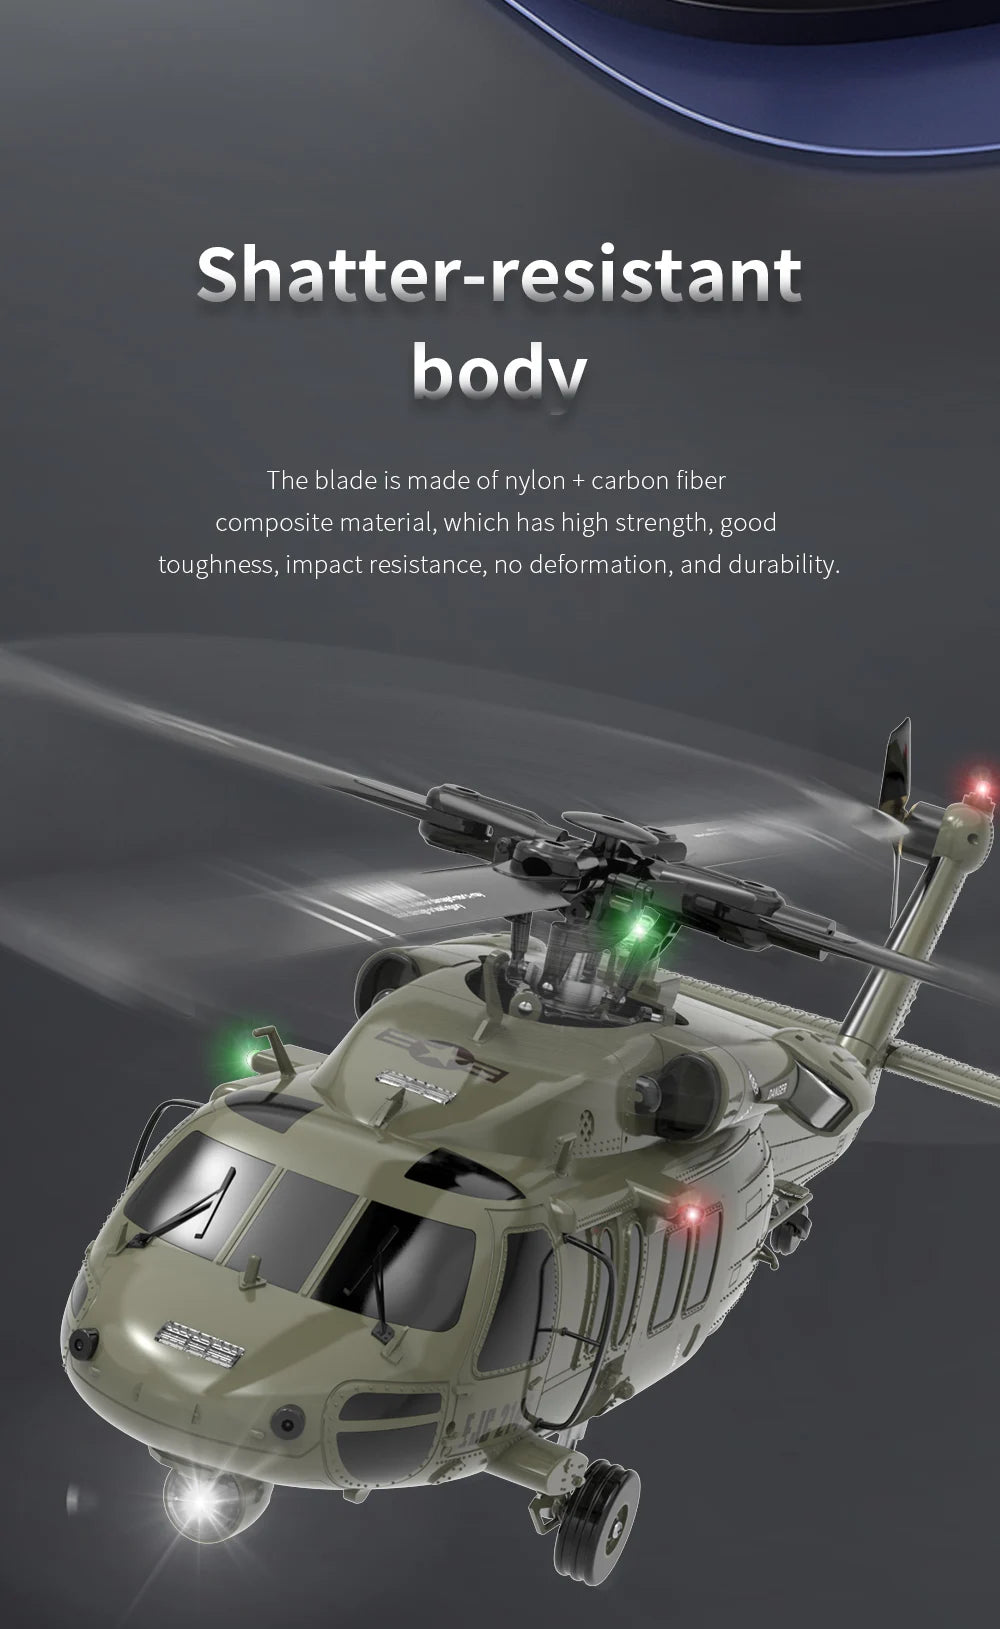 F09 6-Axis RC Helicopter, nylon + carbon fiber composite material has high strength, good toughness, impact resistance, no de